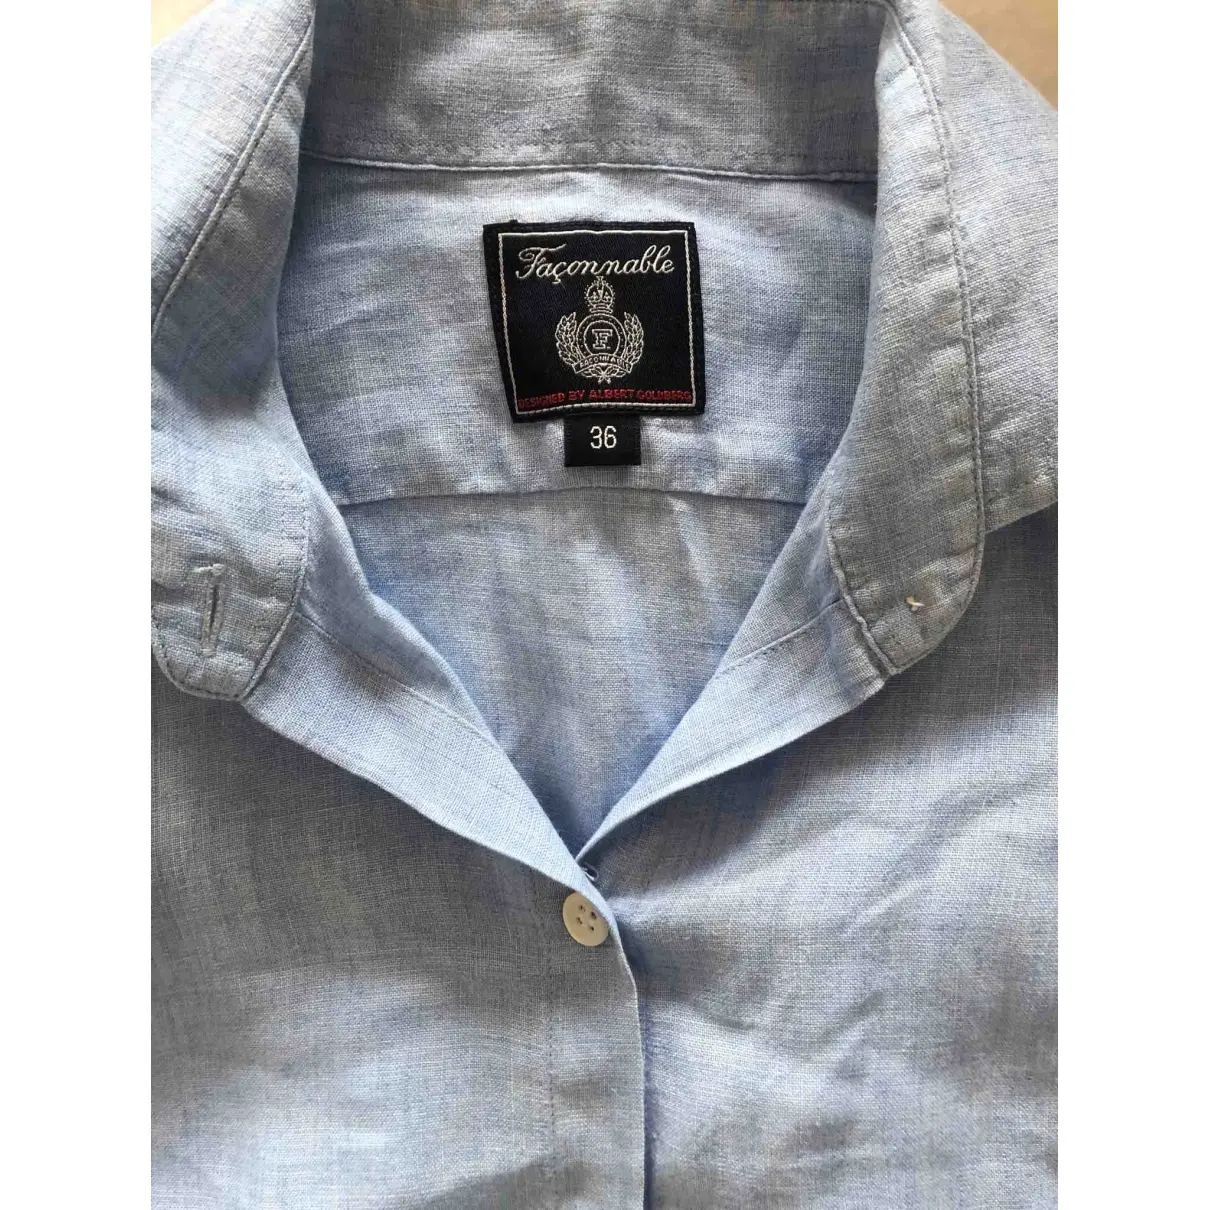 Buy Faconnable Linen blouse online